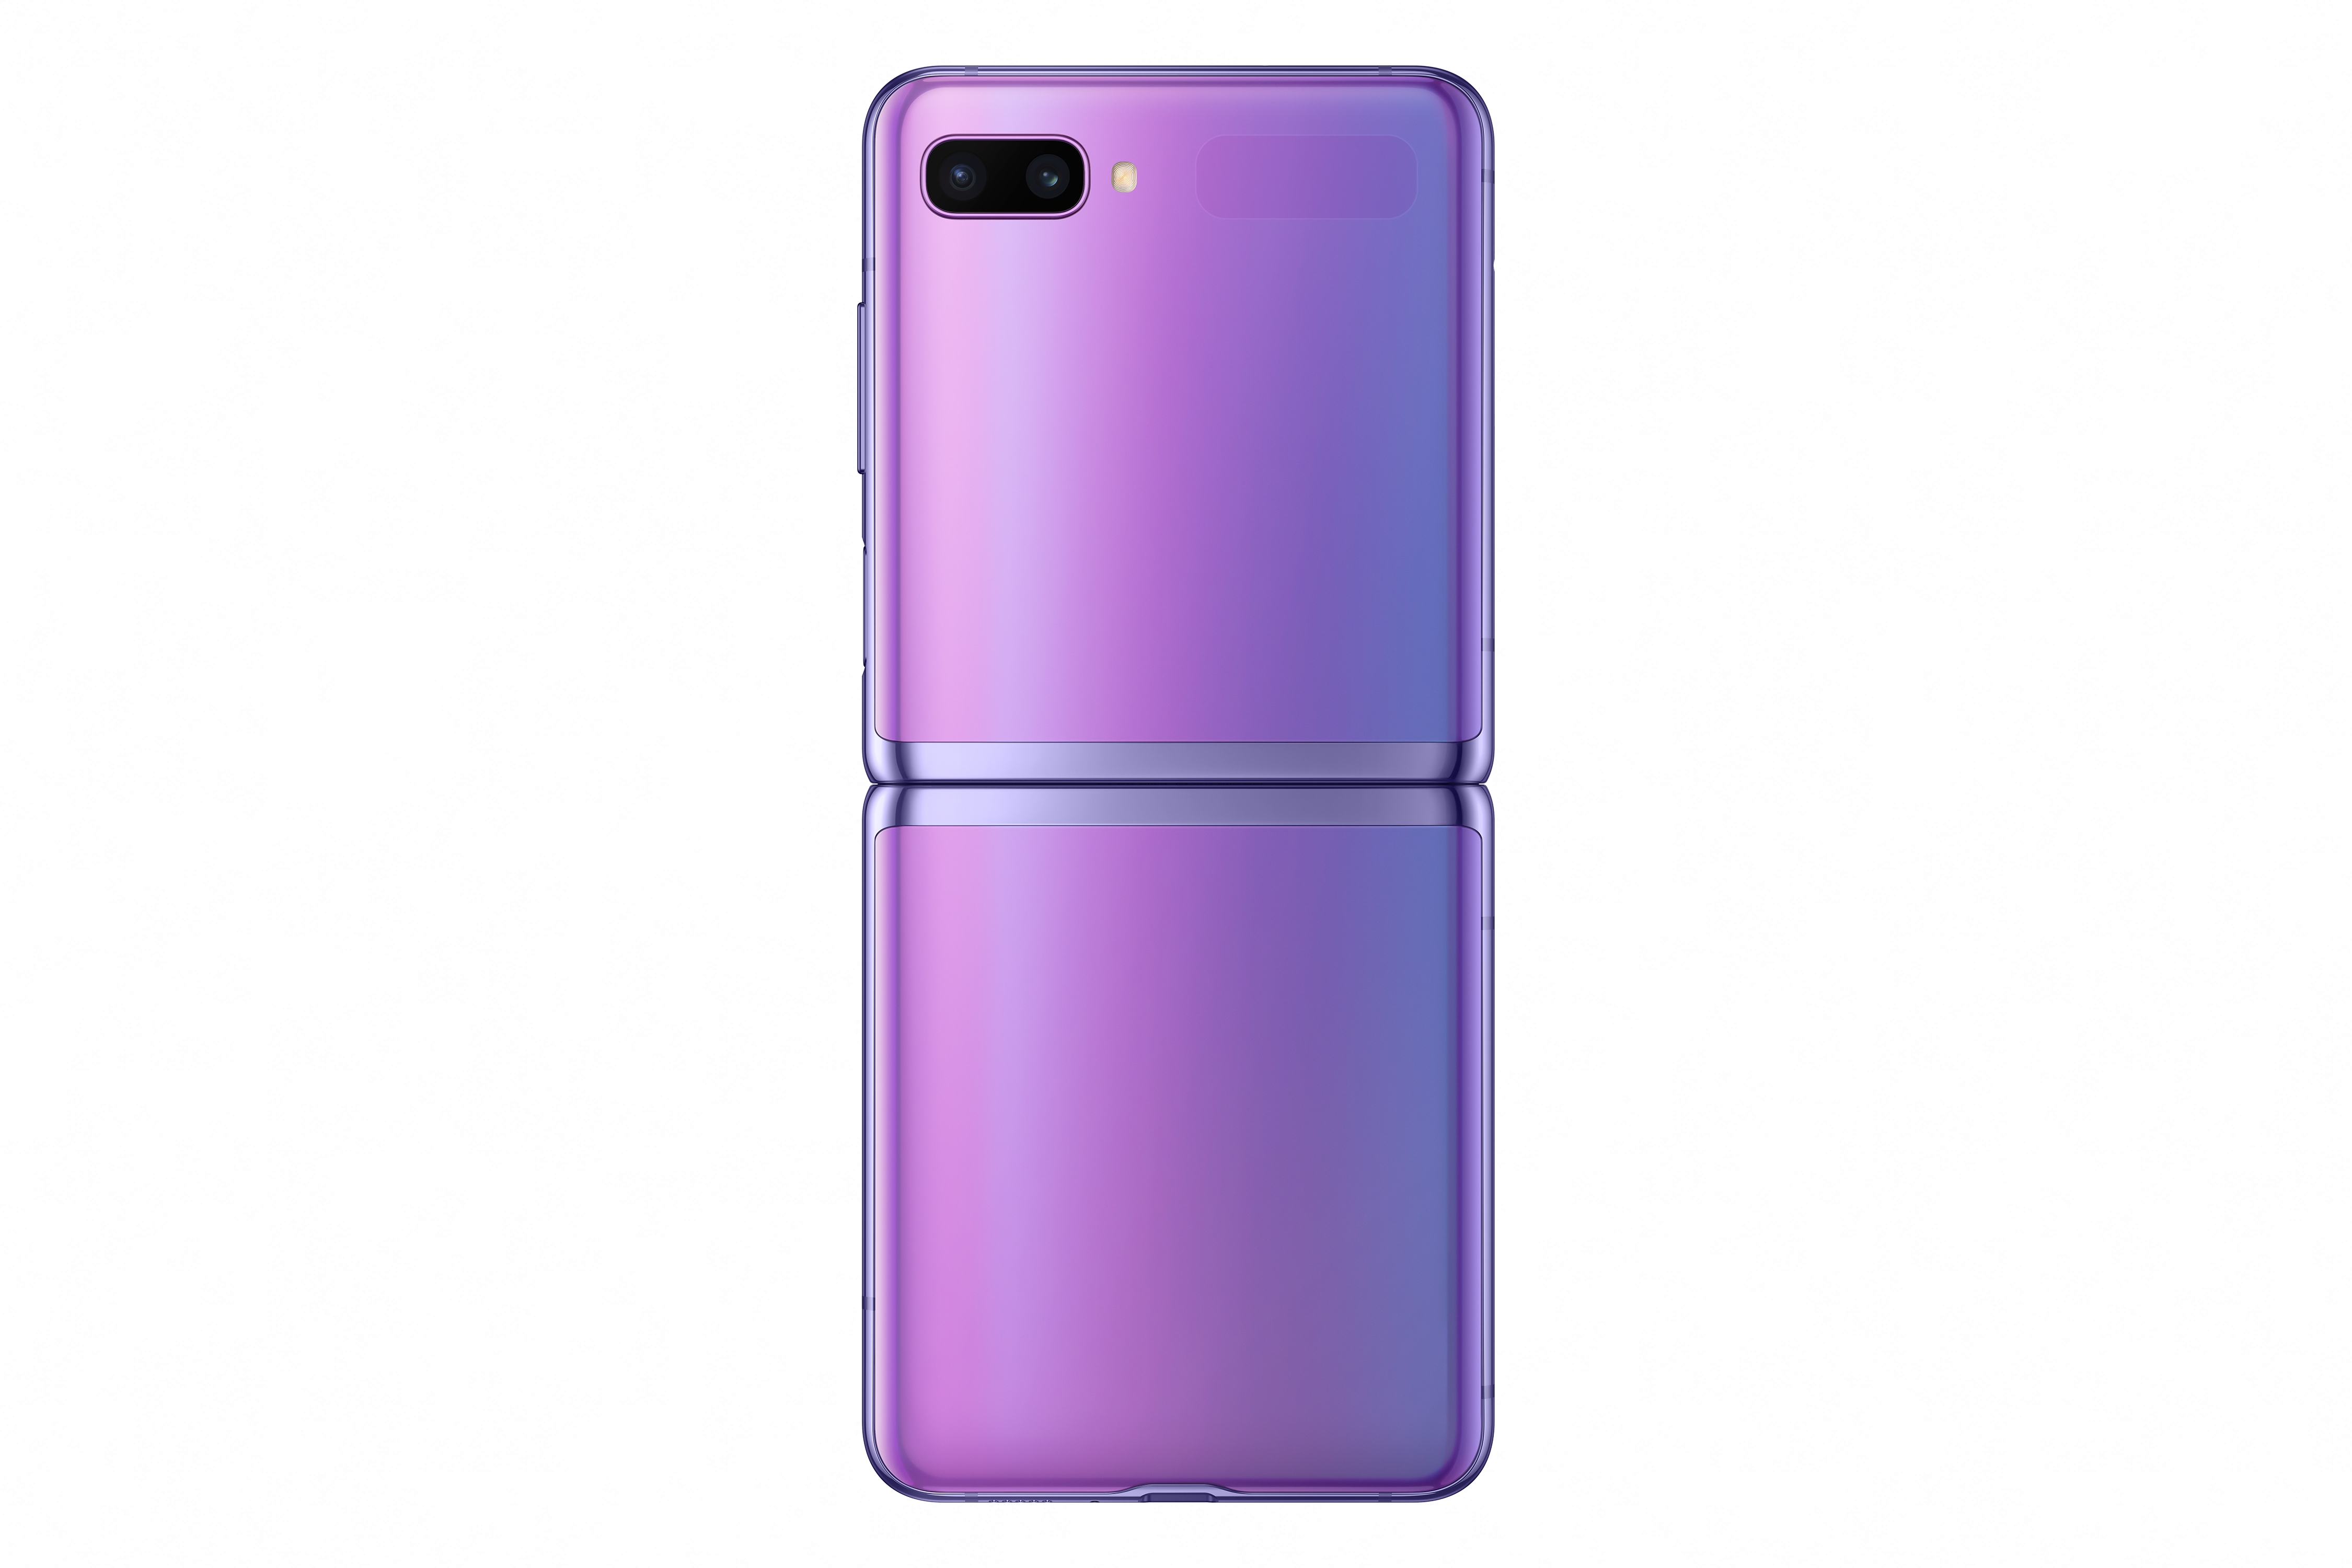 Мобильный телефон 8 256. Samsung Galaxy Galaxy Flip. Самсунг галакси z флип. Samsung Galaxy z Flip 256gb. Смартфон Samsung Galaxy z Flip Purple (SM-f700f/DS).